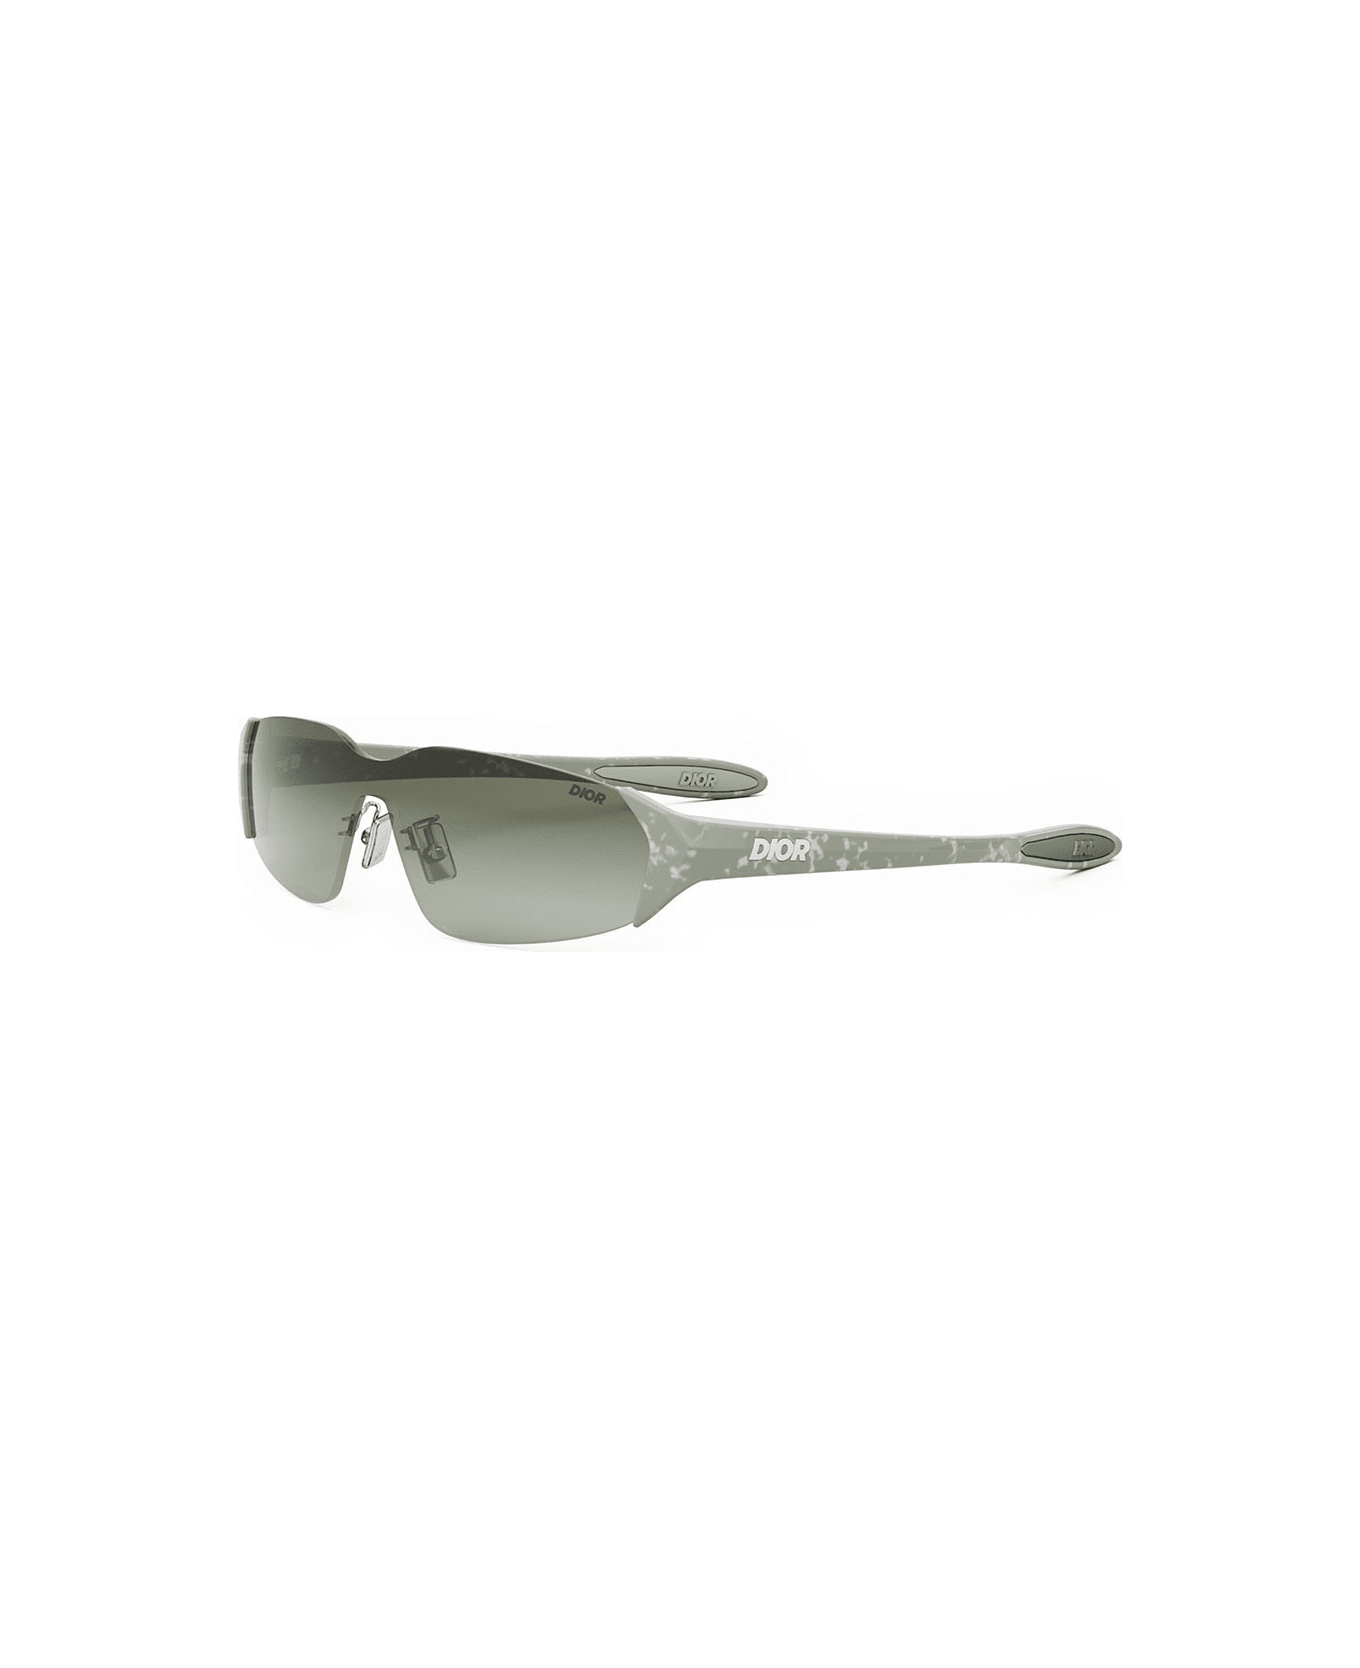 Dior Eyewear Sunglasses - Salvia/Verde sfumato